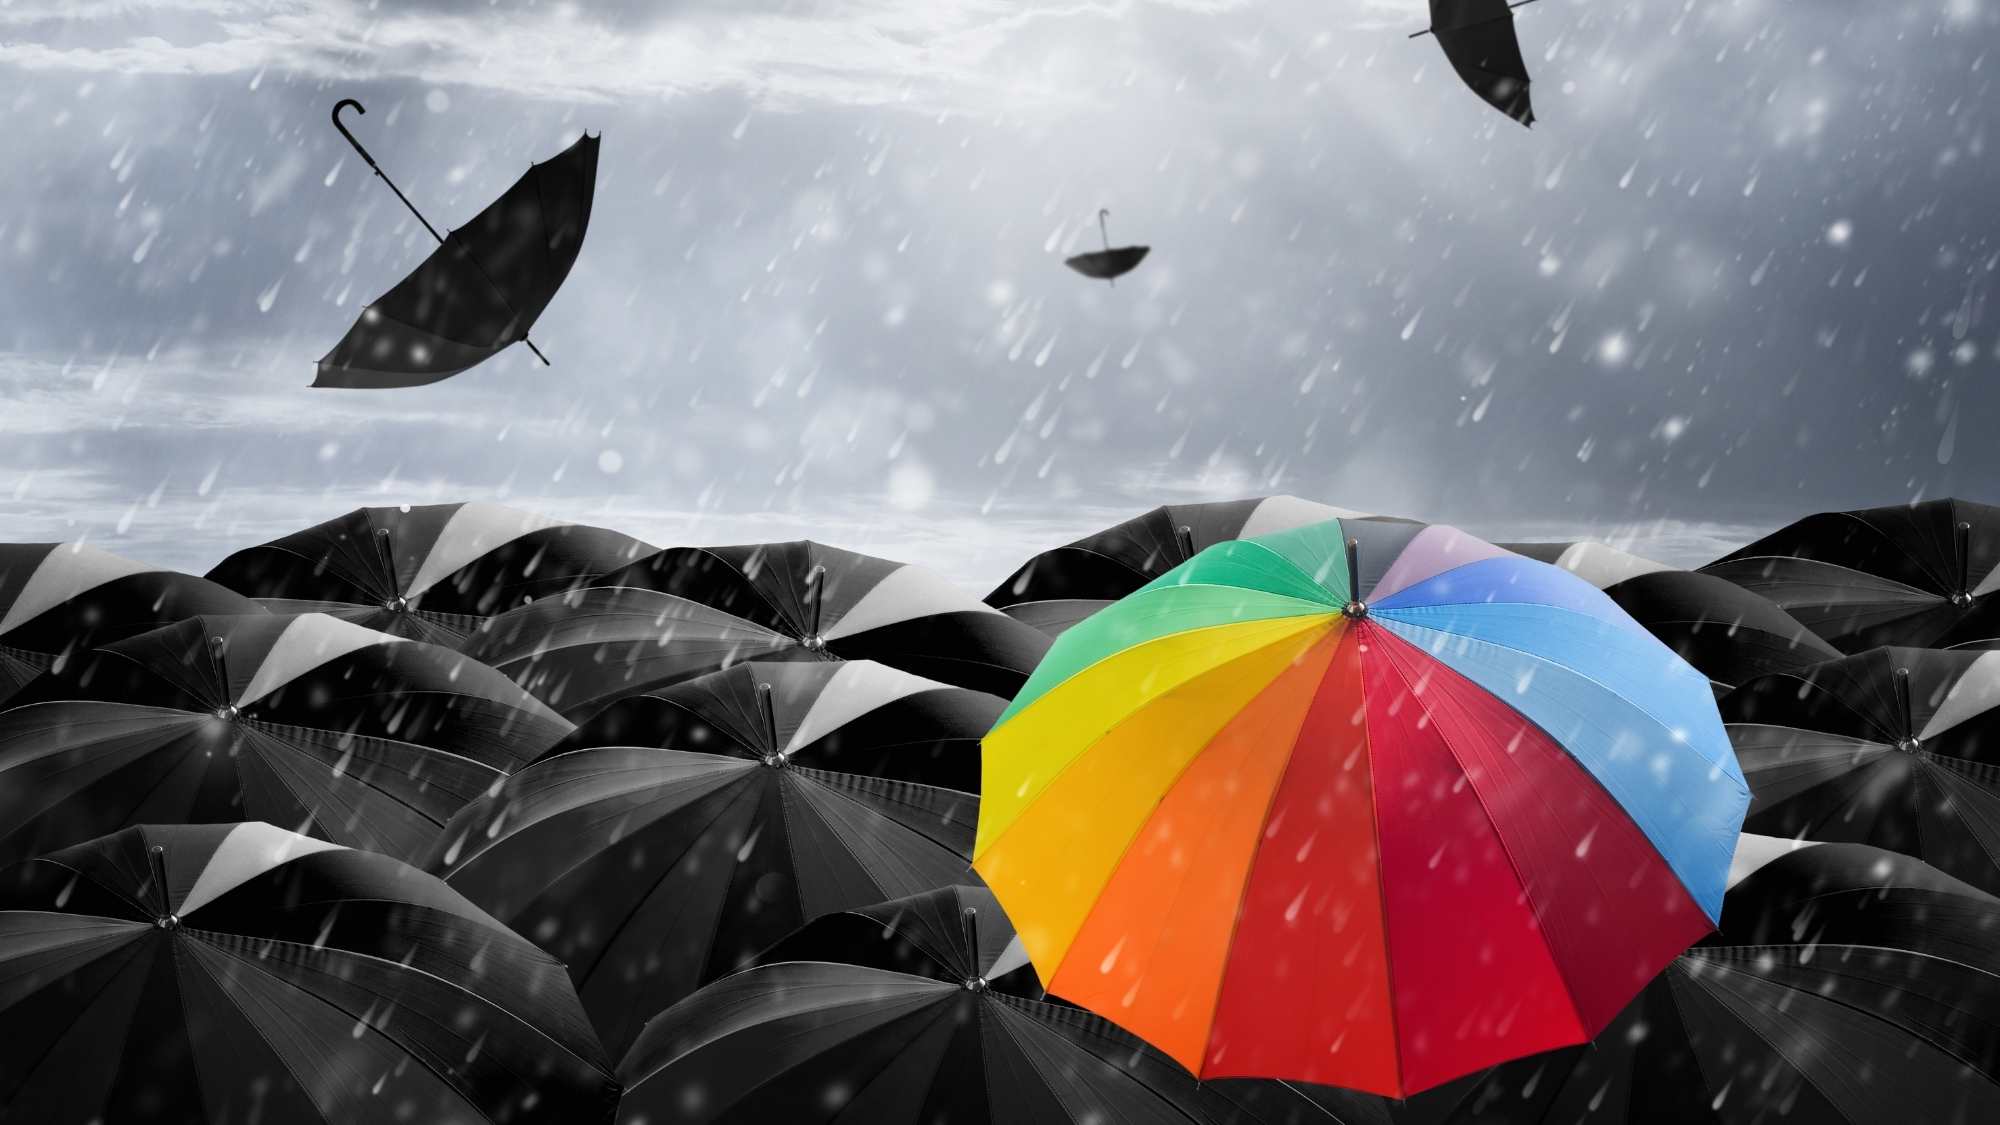 Rainbow umbrella amongst black umbrellas in a storm